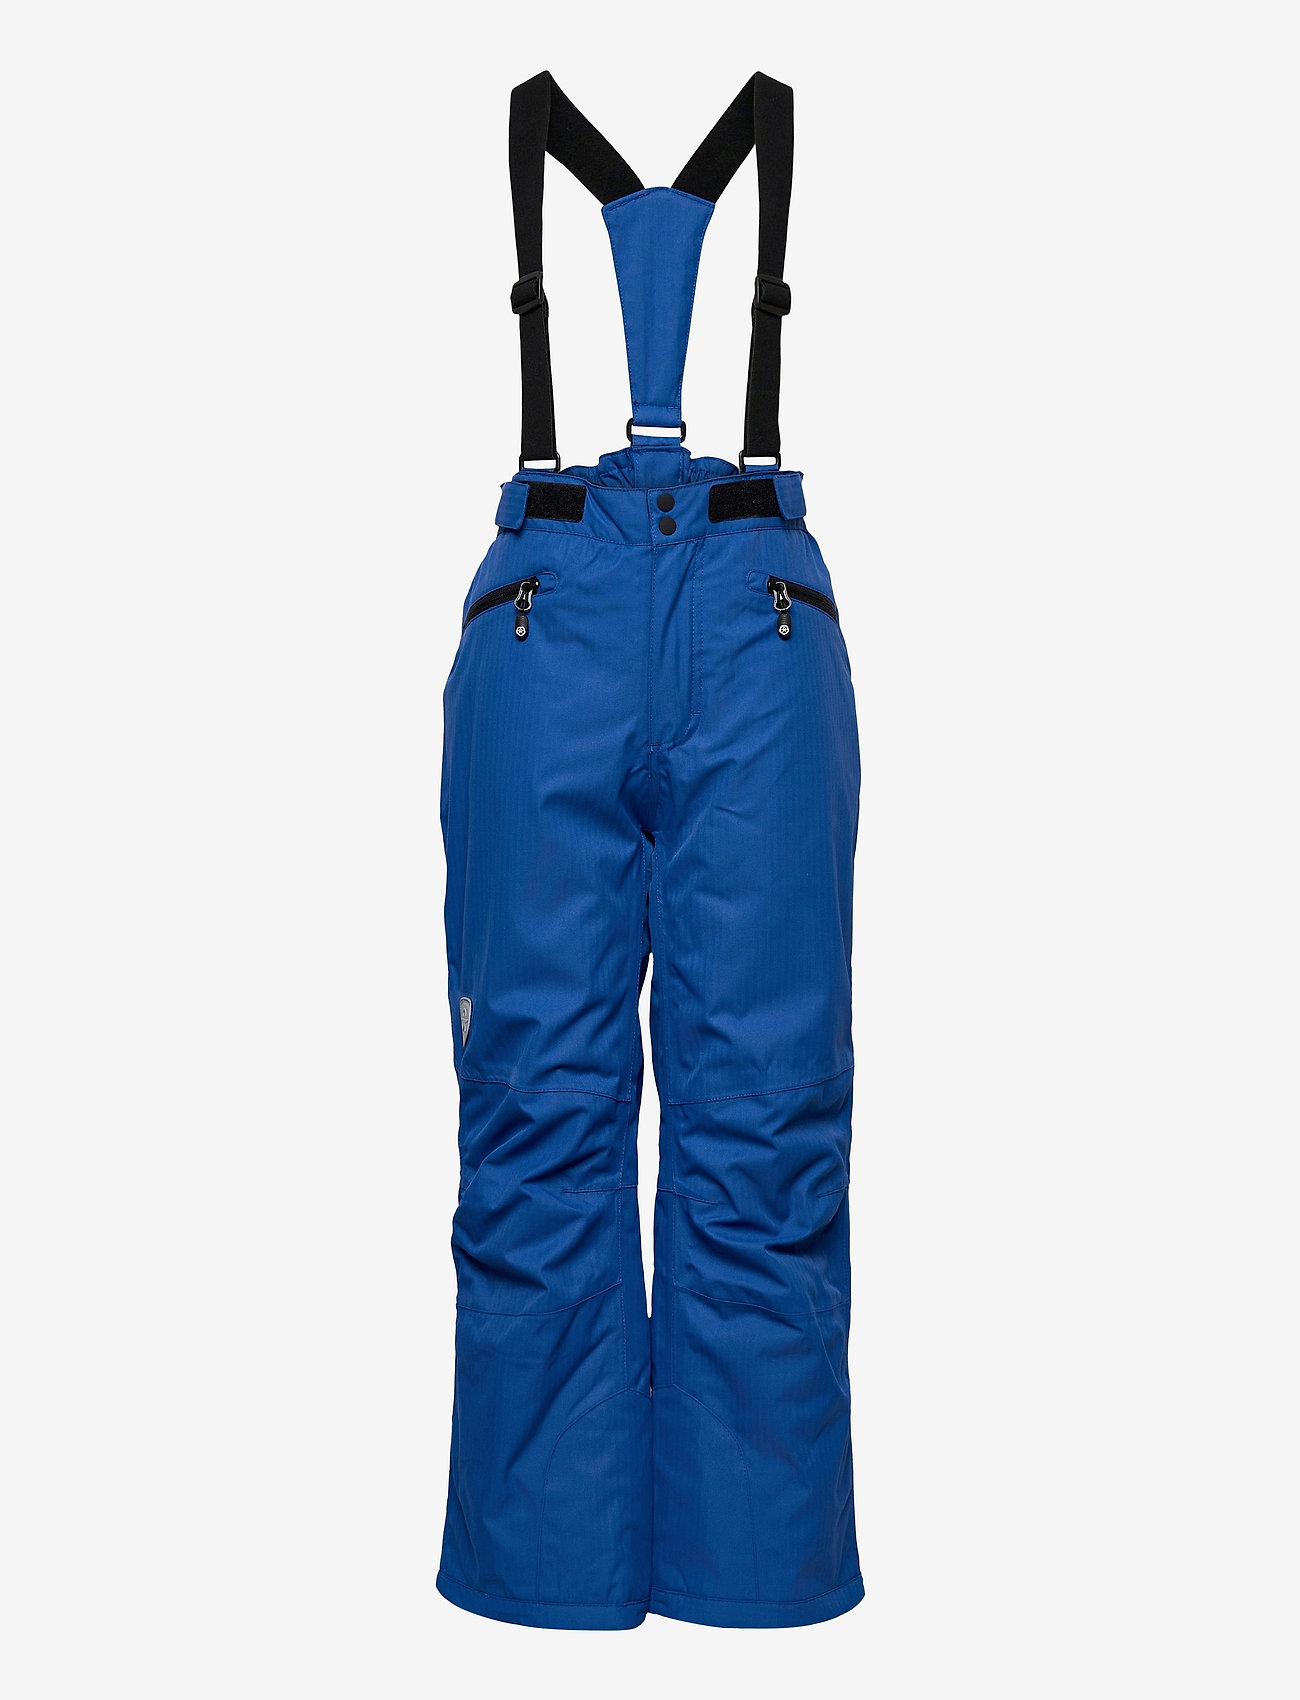 Color Kids - Ski pants w/Pockets, AF 10.000 - winterhose - galaxy blue - 0